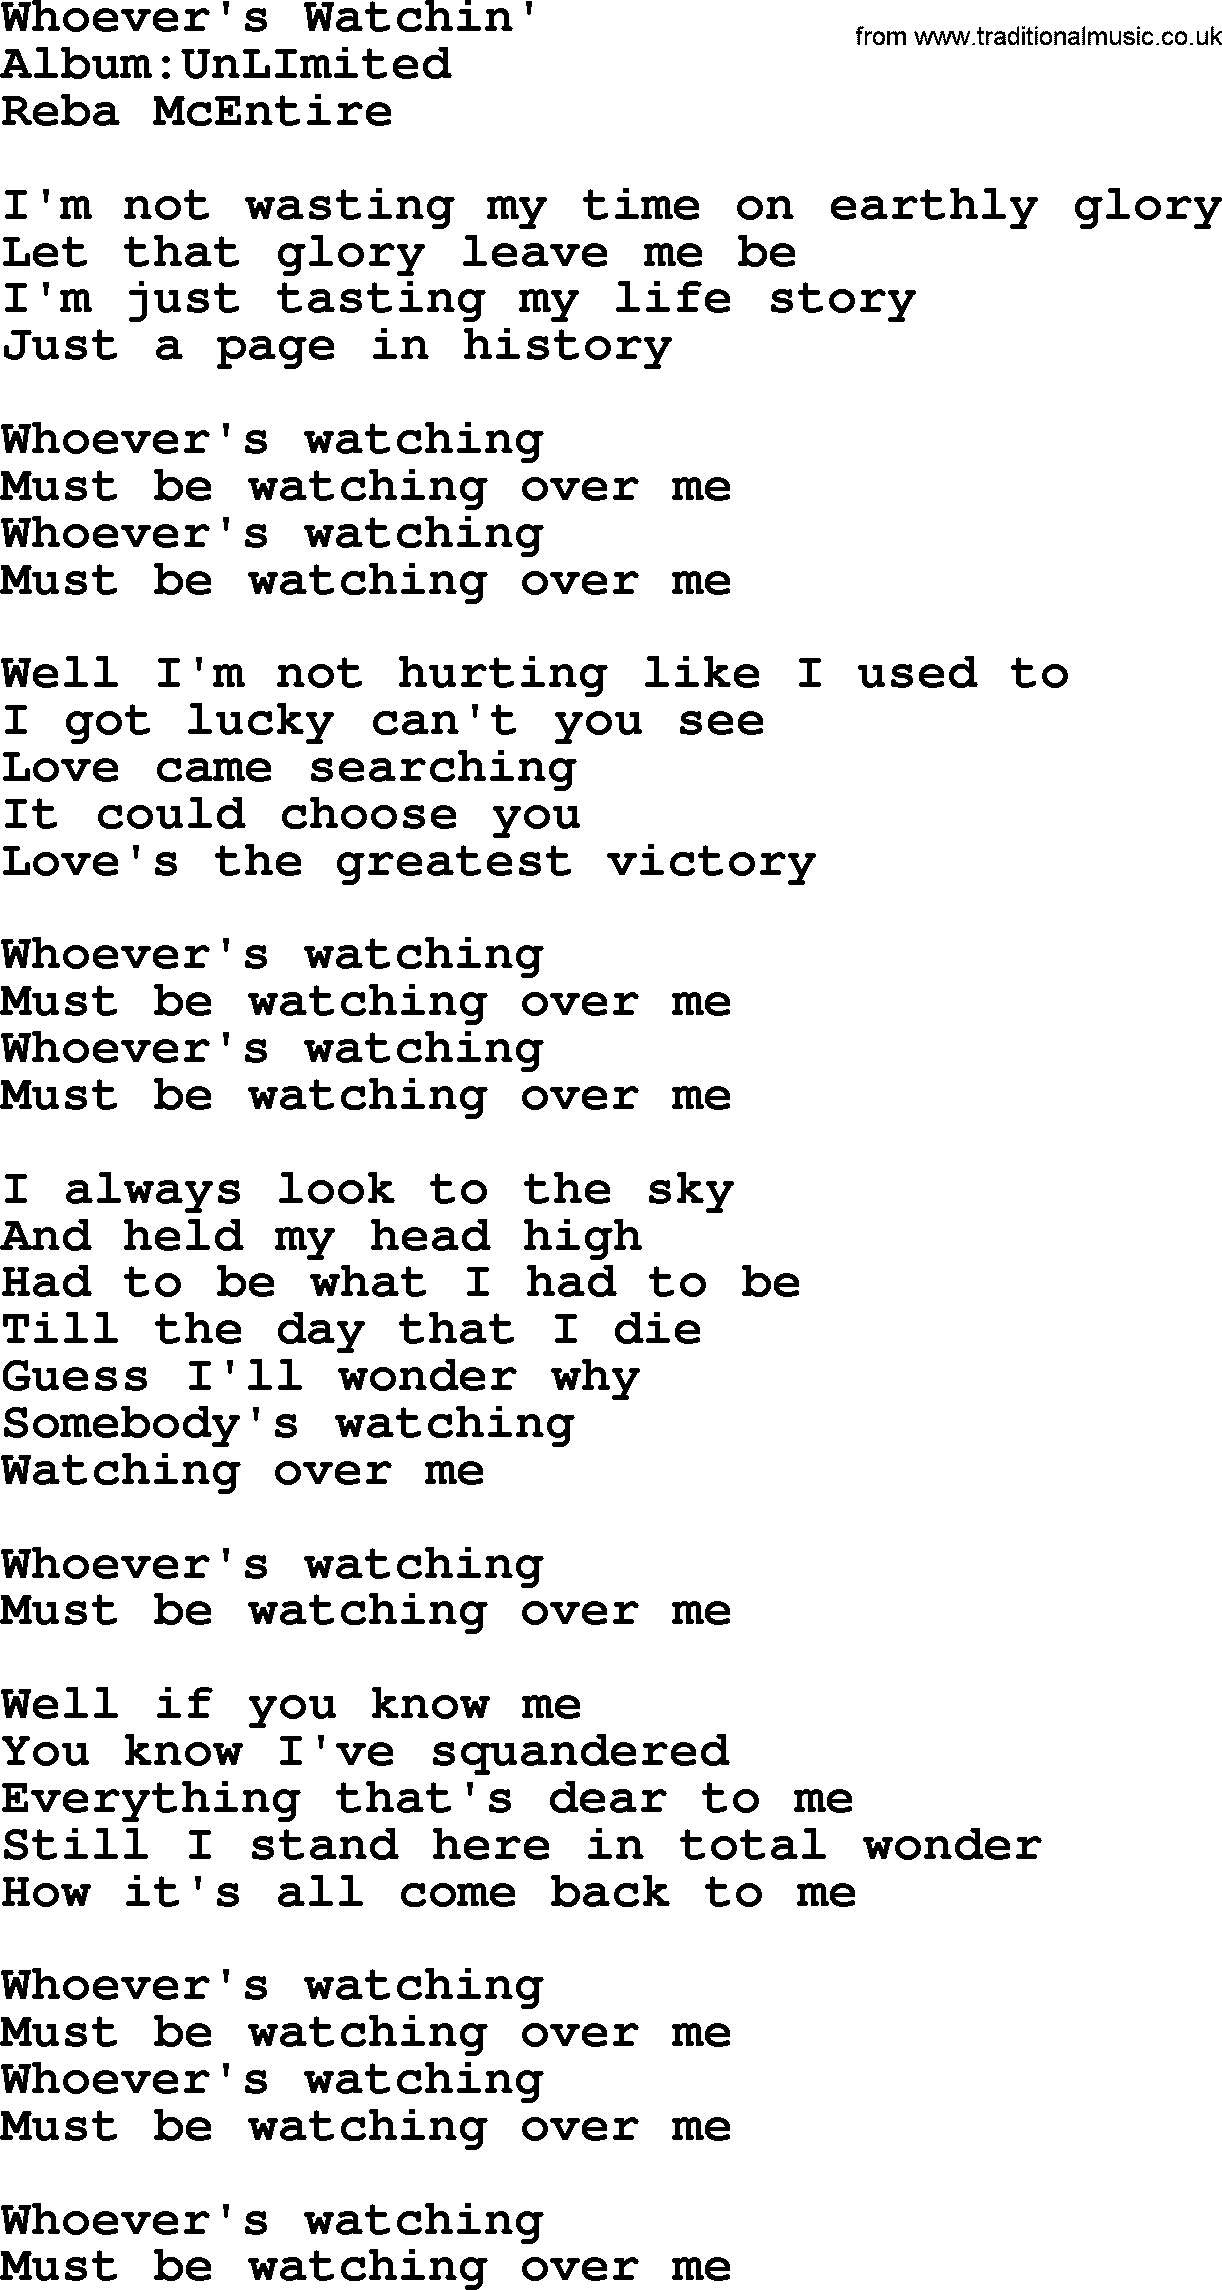 Reba McEntire song: Whoever's Watchin' lyrics